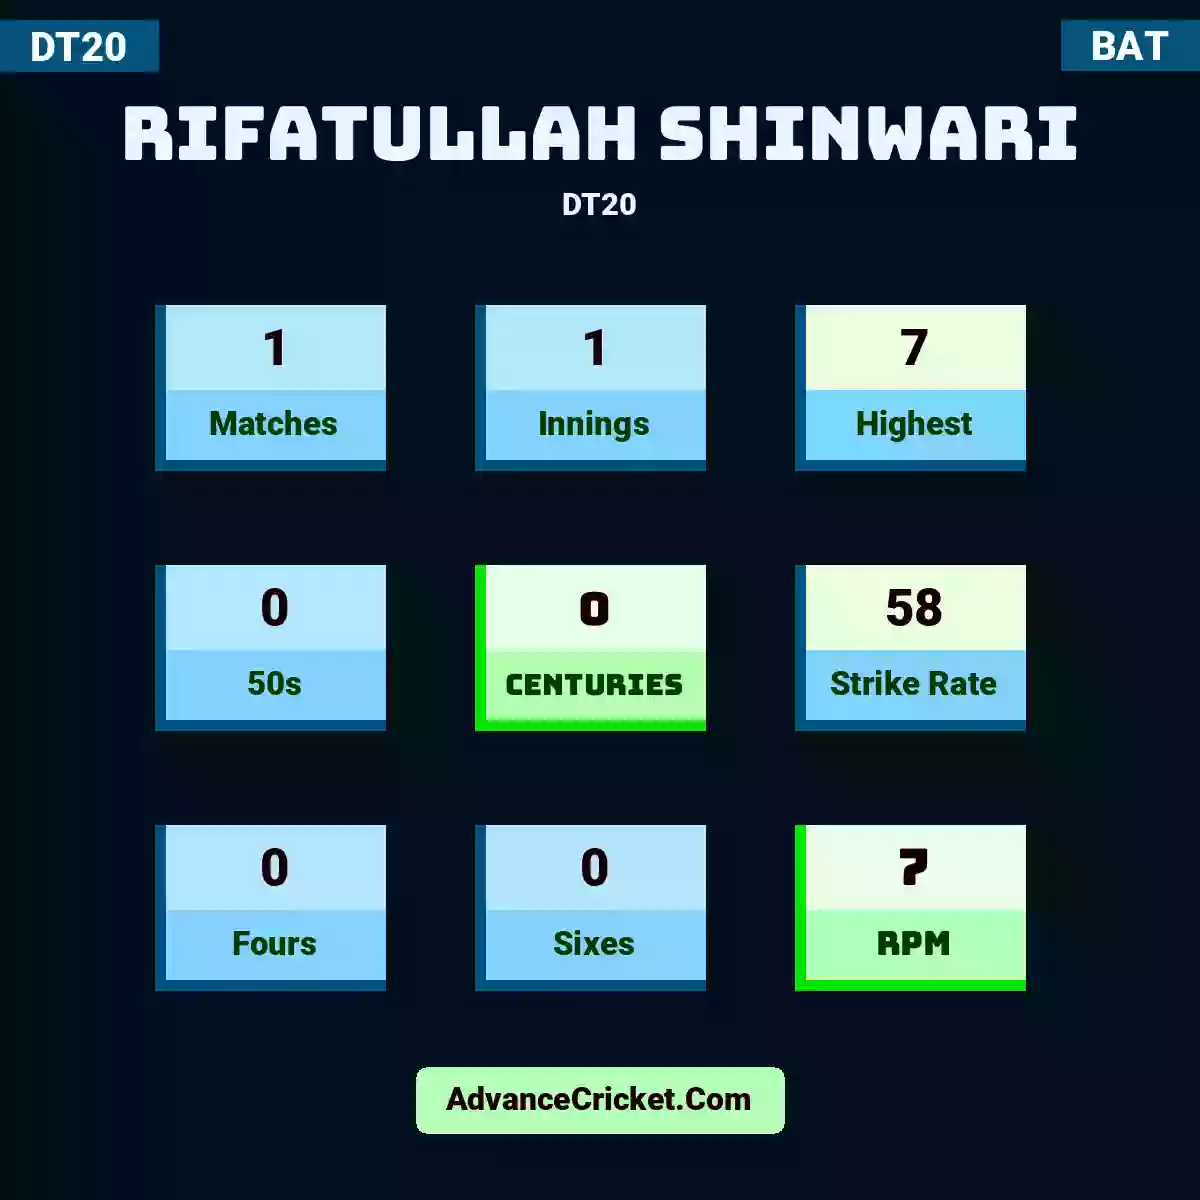 Rifatullah Shinwari DT20 , Rifatullah Shinwari played 1 matches, scored 7 runs as highest, 0 half-centuries, and 0 centuries, with a strike rate of 58. R.Shinwari hit 0 fours and 0 sixes, with an RPM of 7.